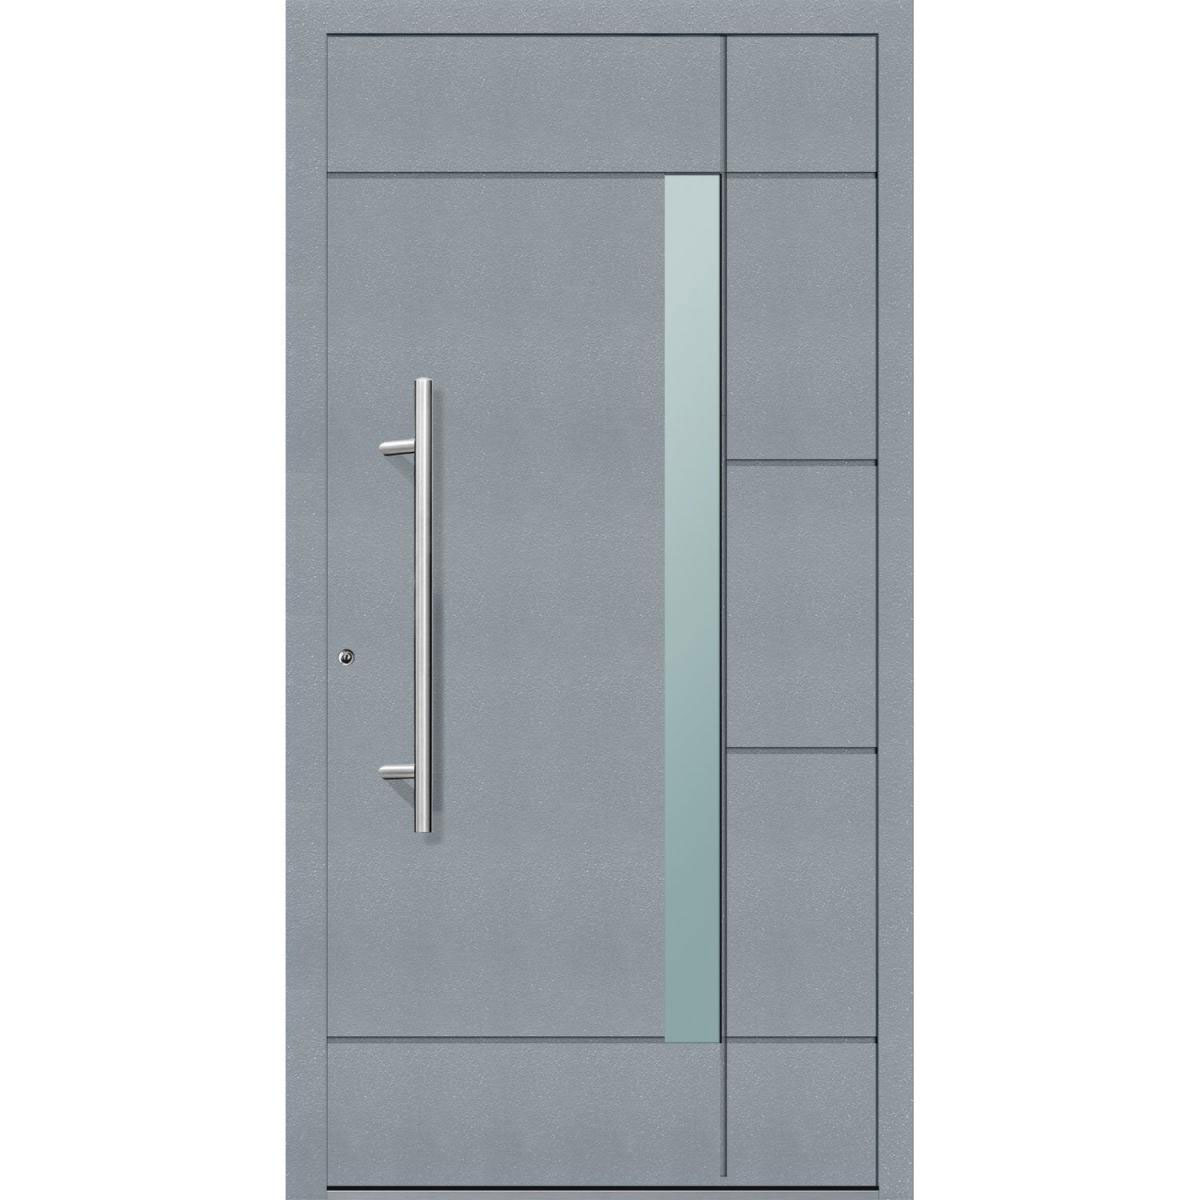 Aluminium Sicherheits-Haustür „Vicenza Exklusiv“, 75mm, grau, 110x210 cm, Anschlag links, inkl. Griffset